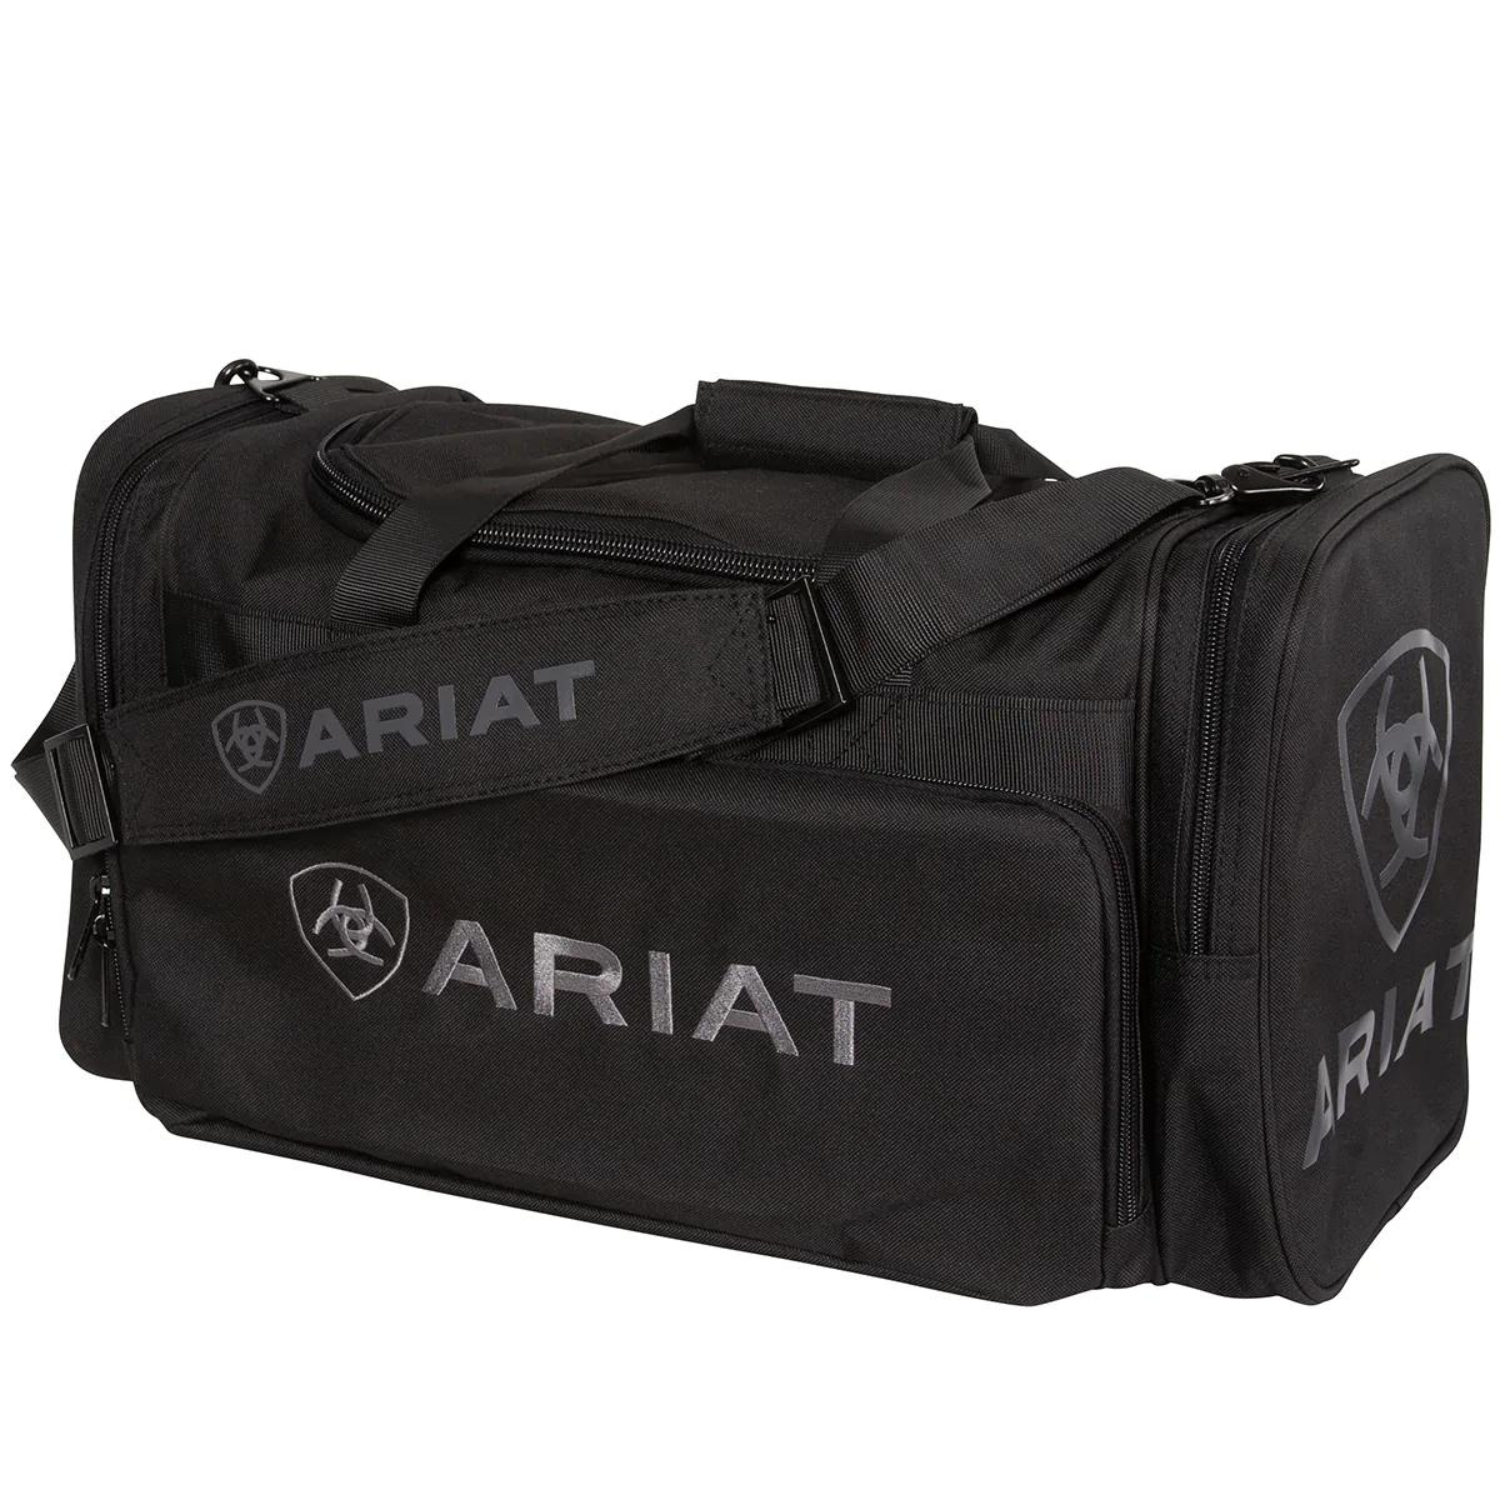 Ariat Gear Bag